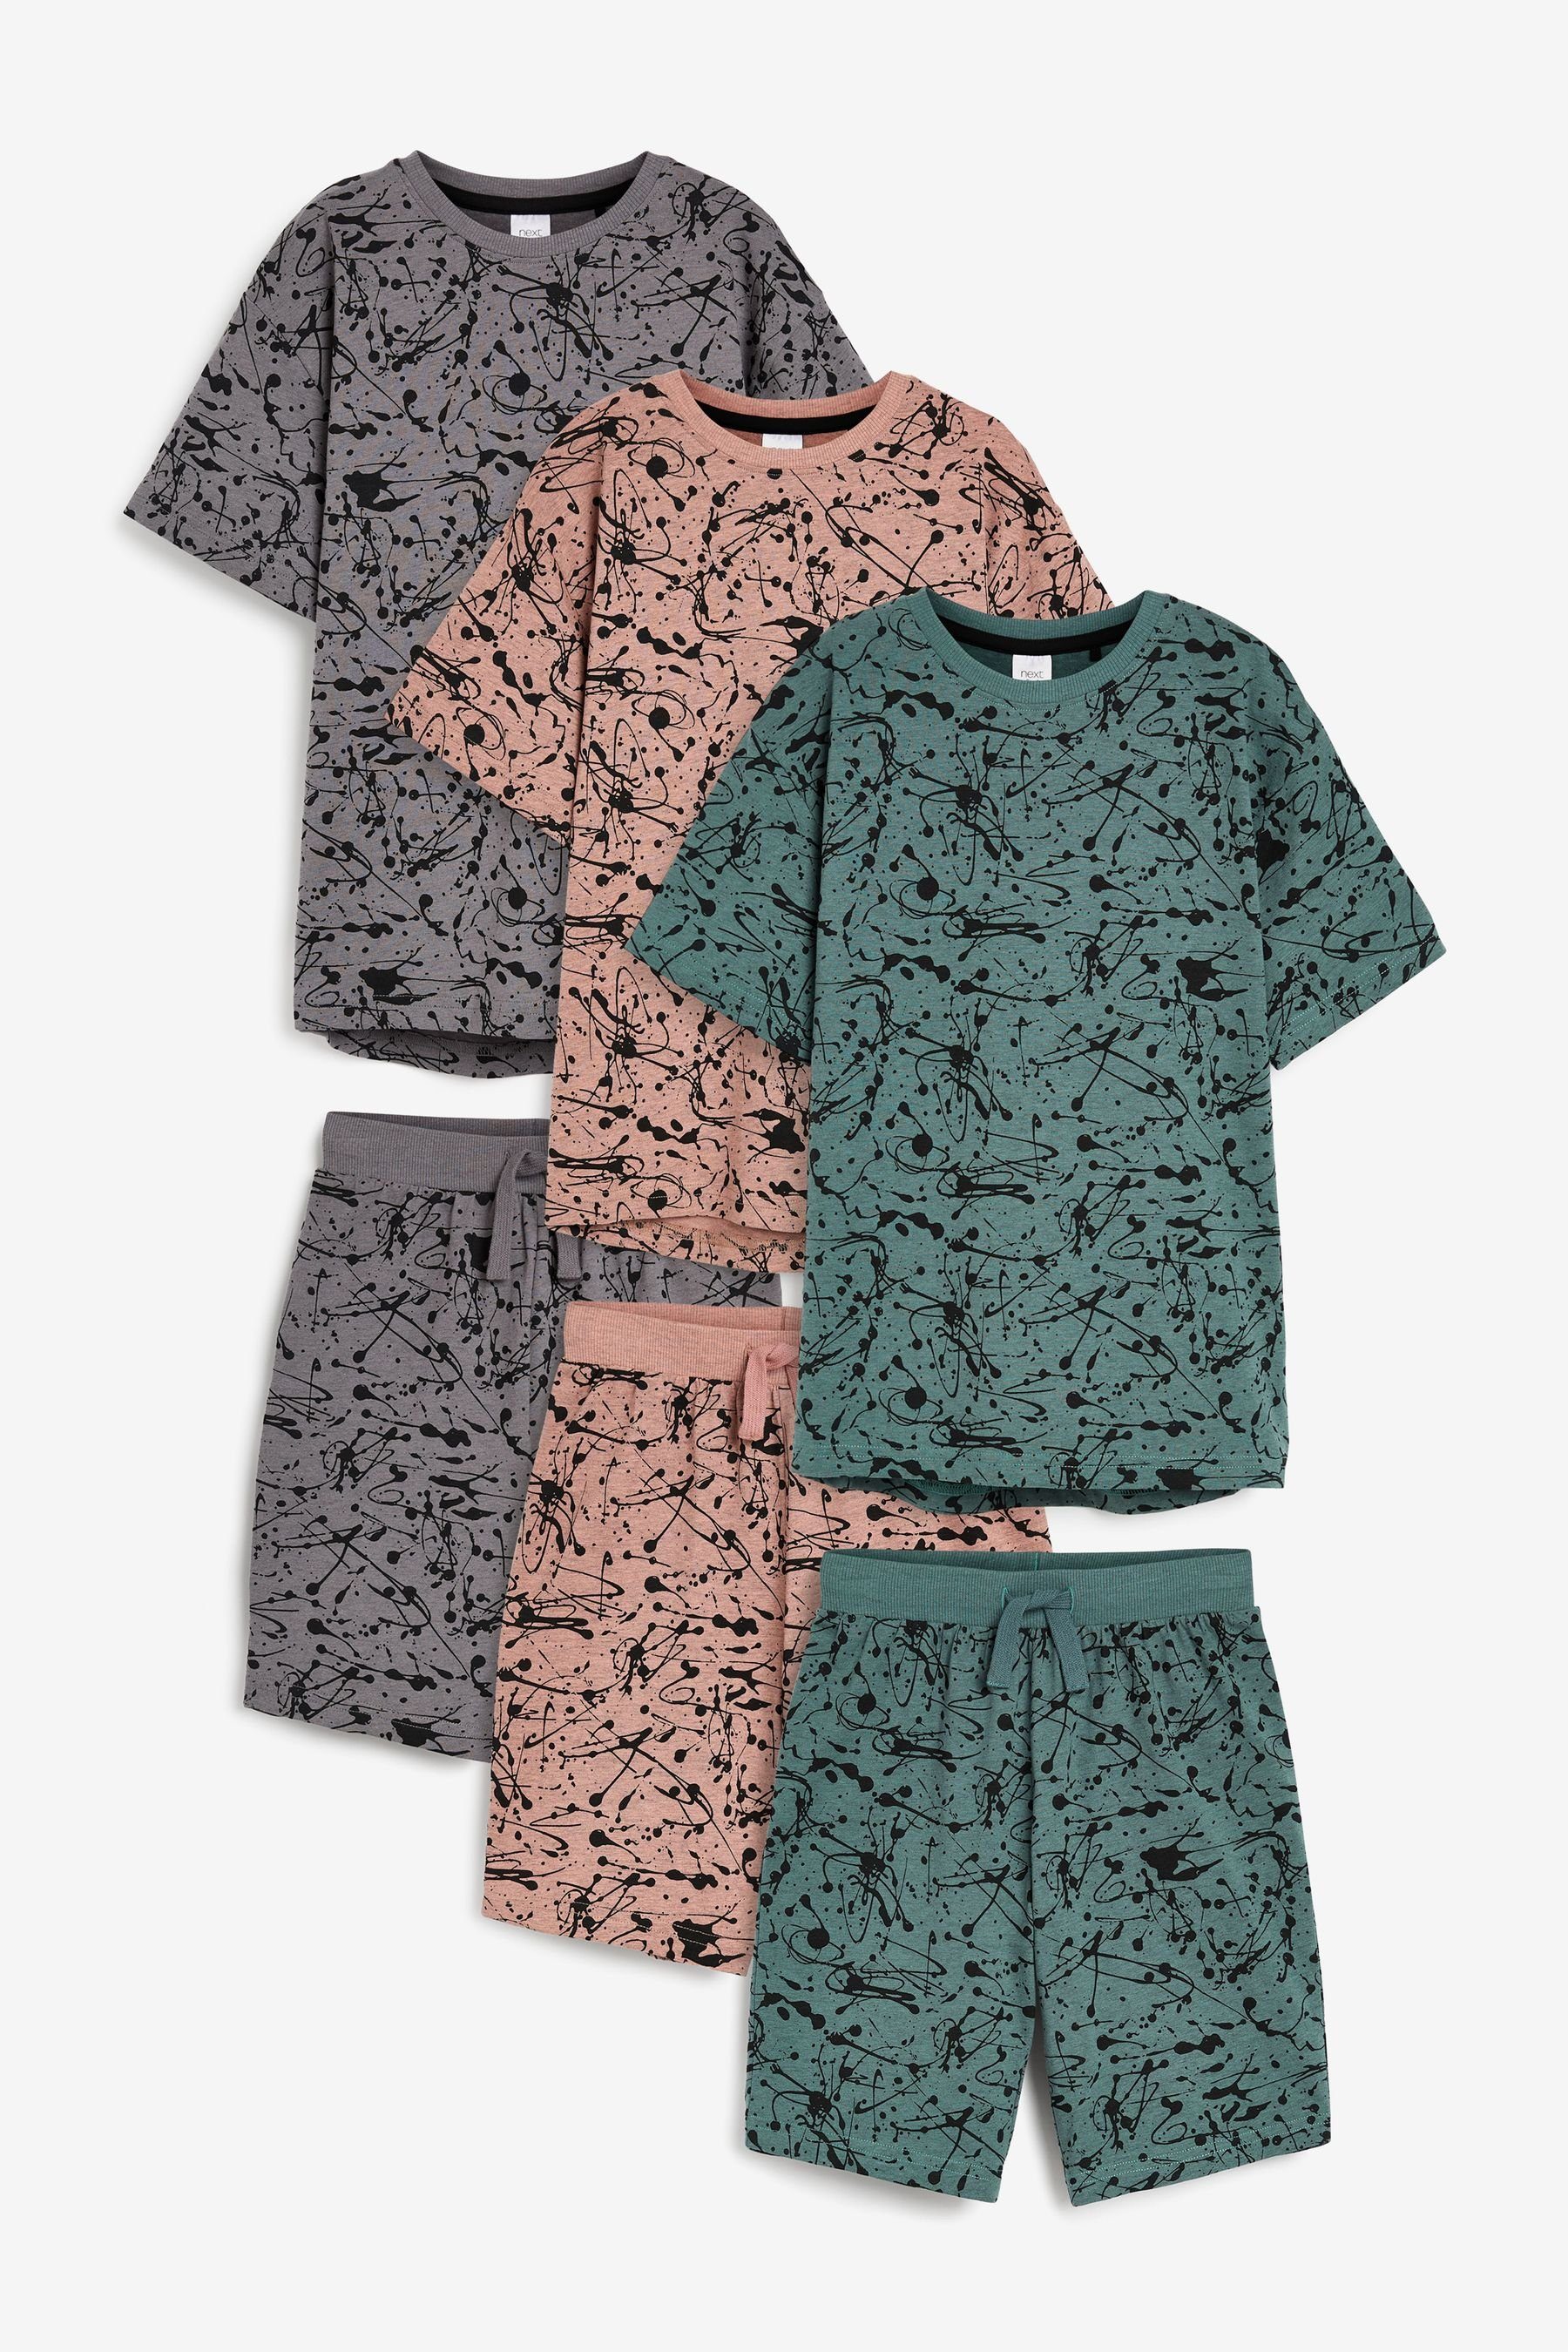 Next Pyjama Kurze Schlafanzüge, 3er-Pack (6 Teal/Grey Splat tlg) Oversized